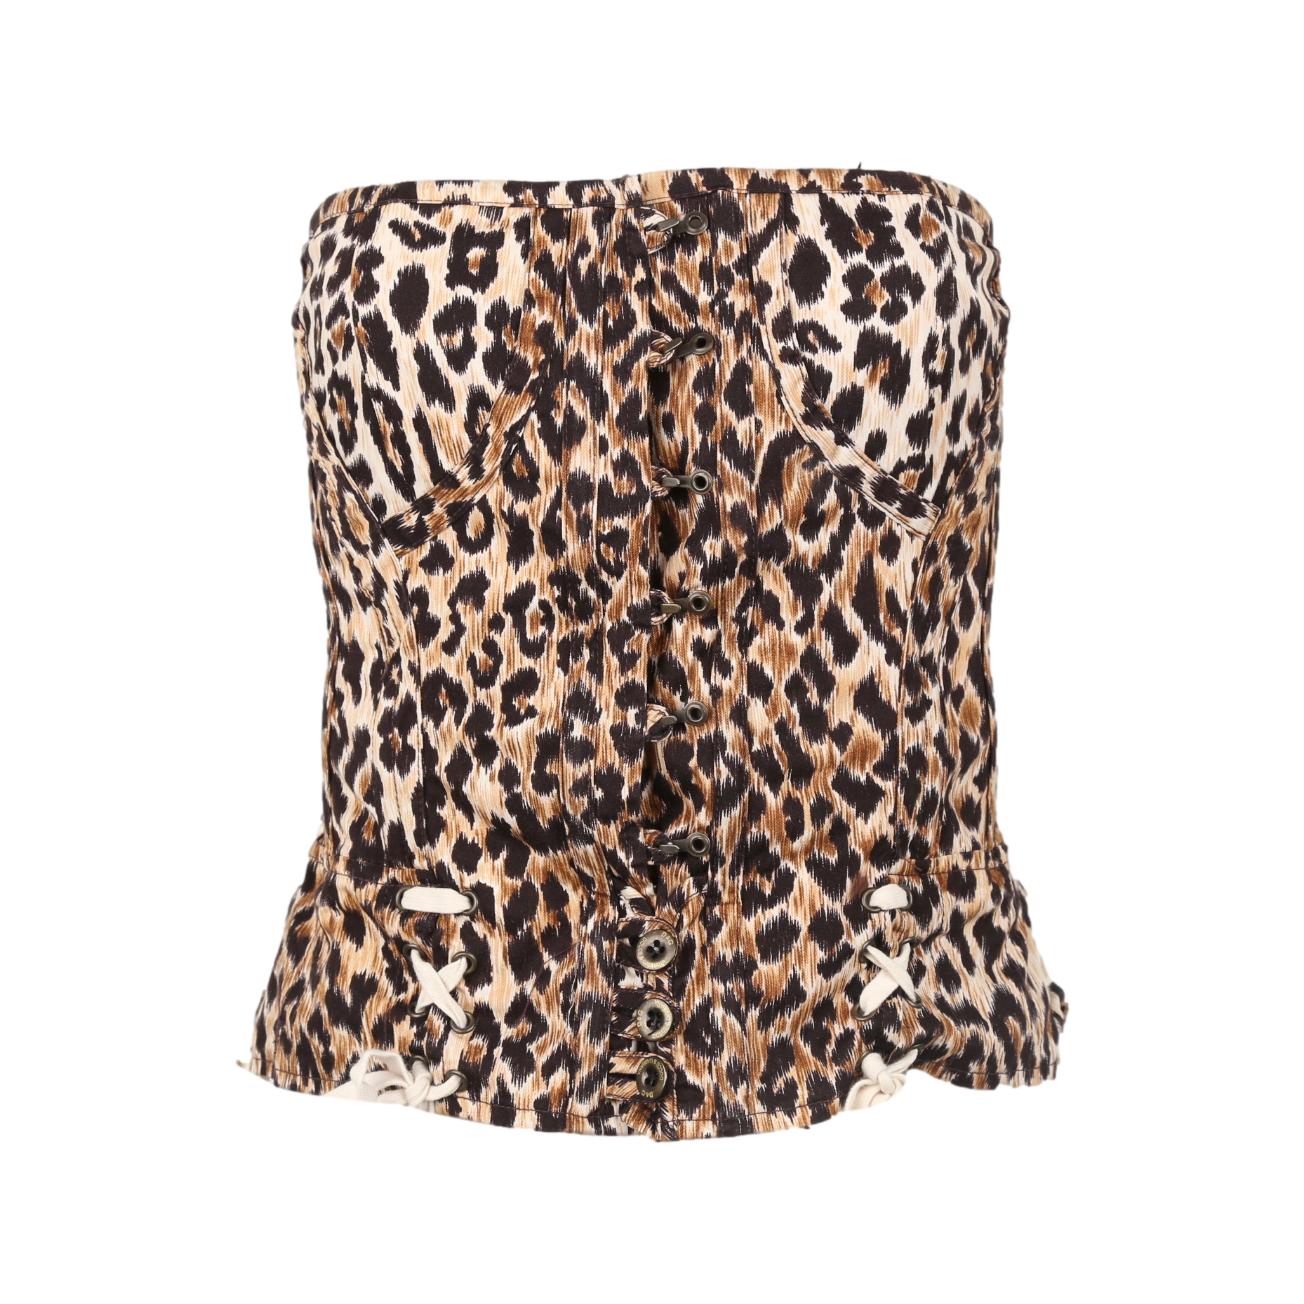 Dolce and Gabbana Cheetah Print Corset - Apparel